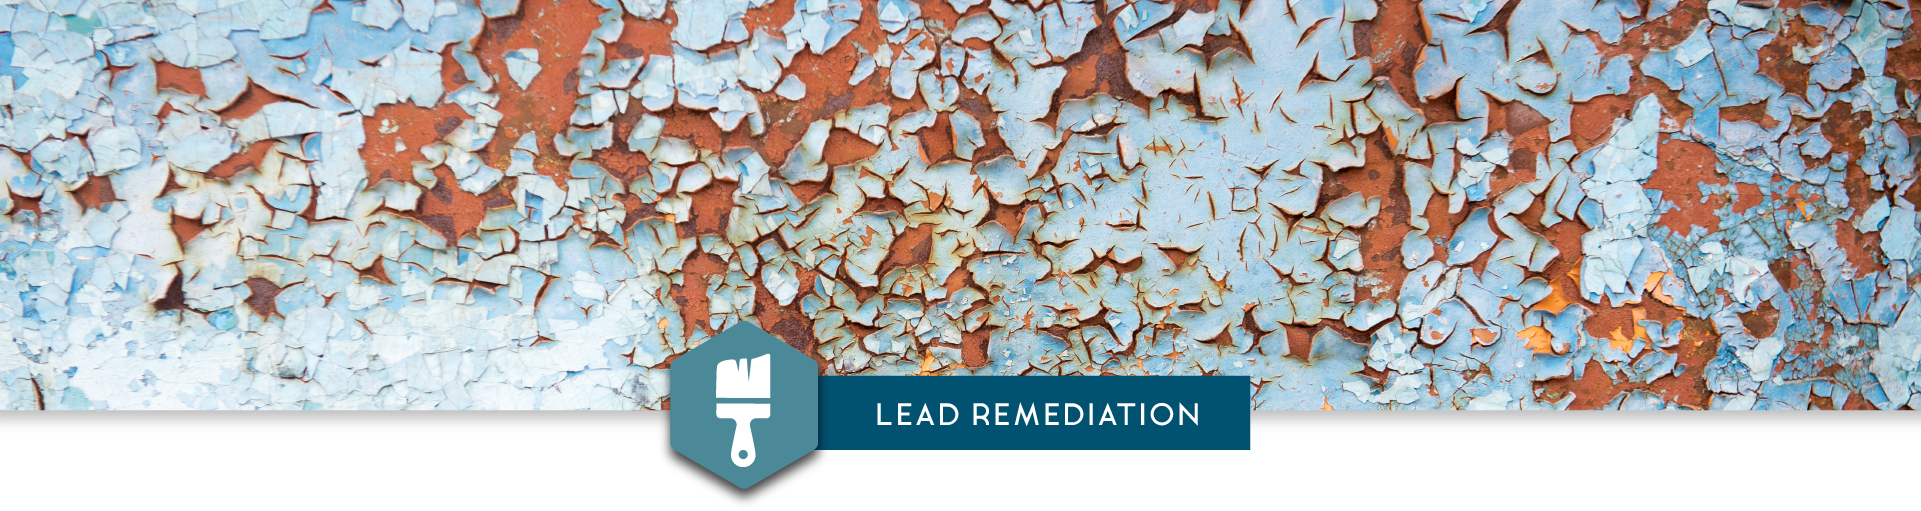 lead paint environmental remediation services